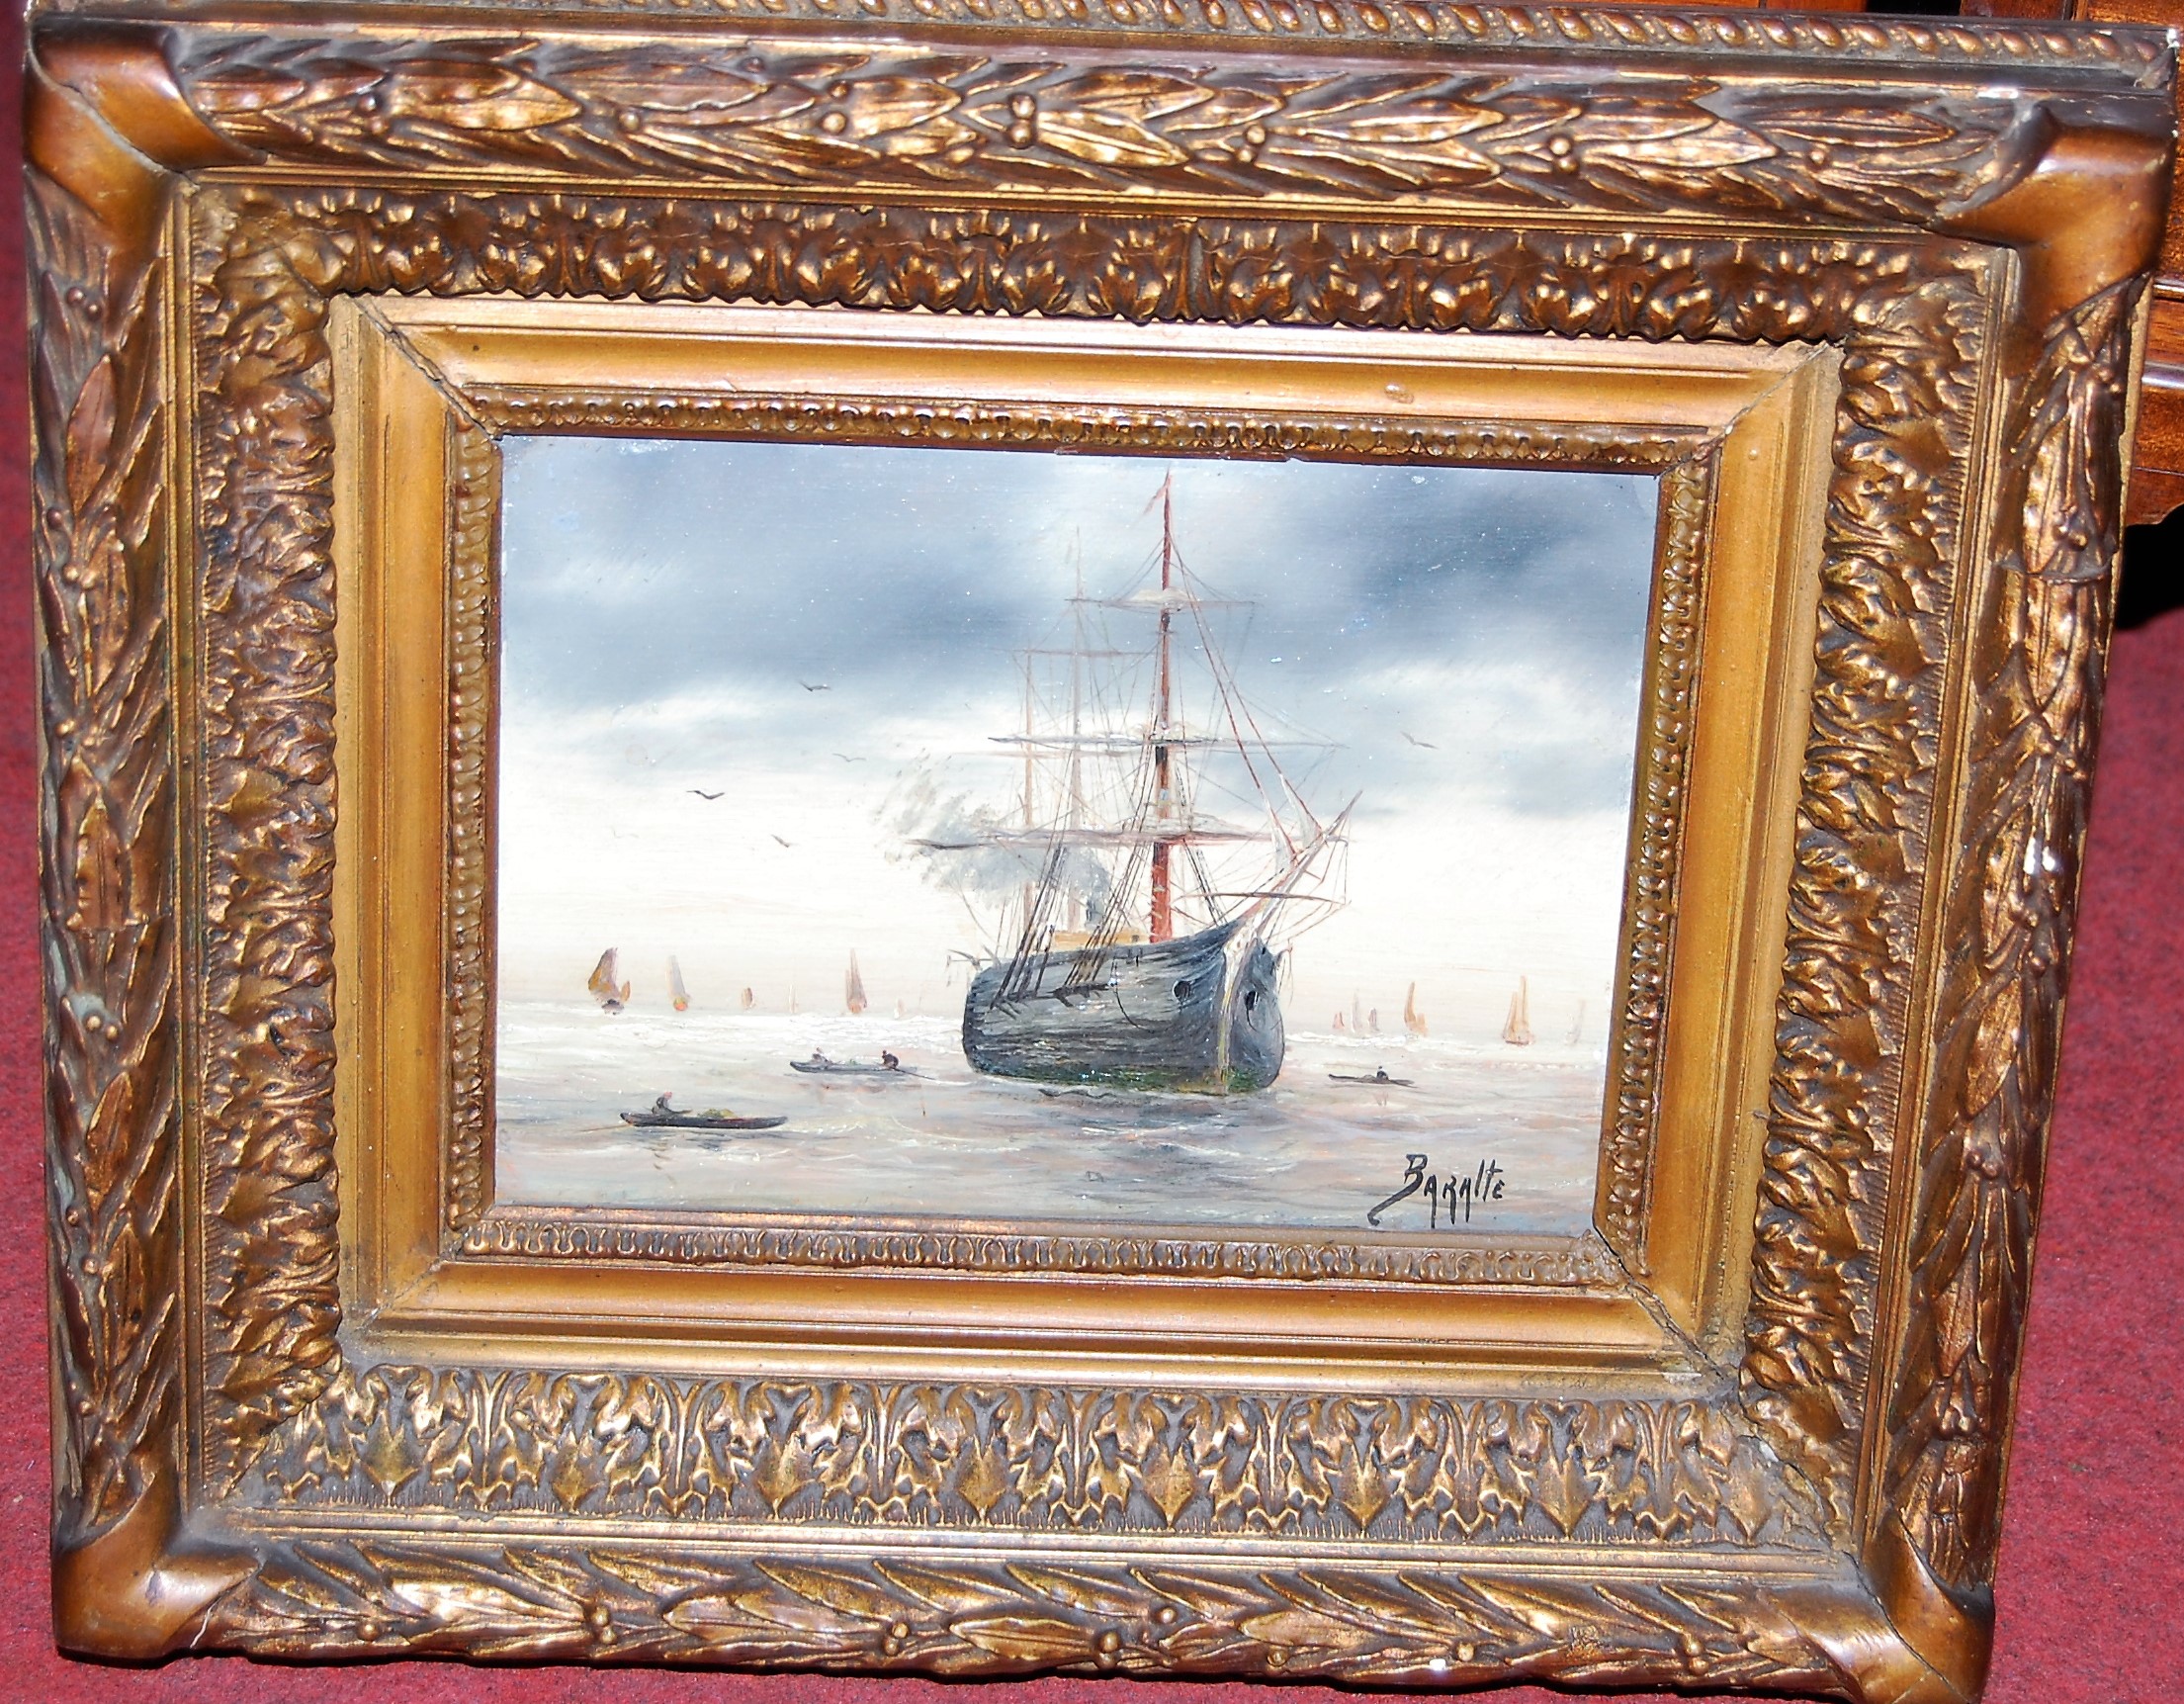 Baralte - Nautical scene, oil on panel, signed lower right, 15 x 21cm